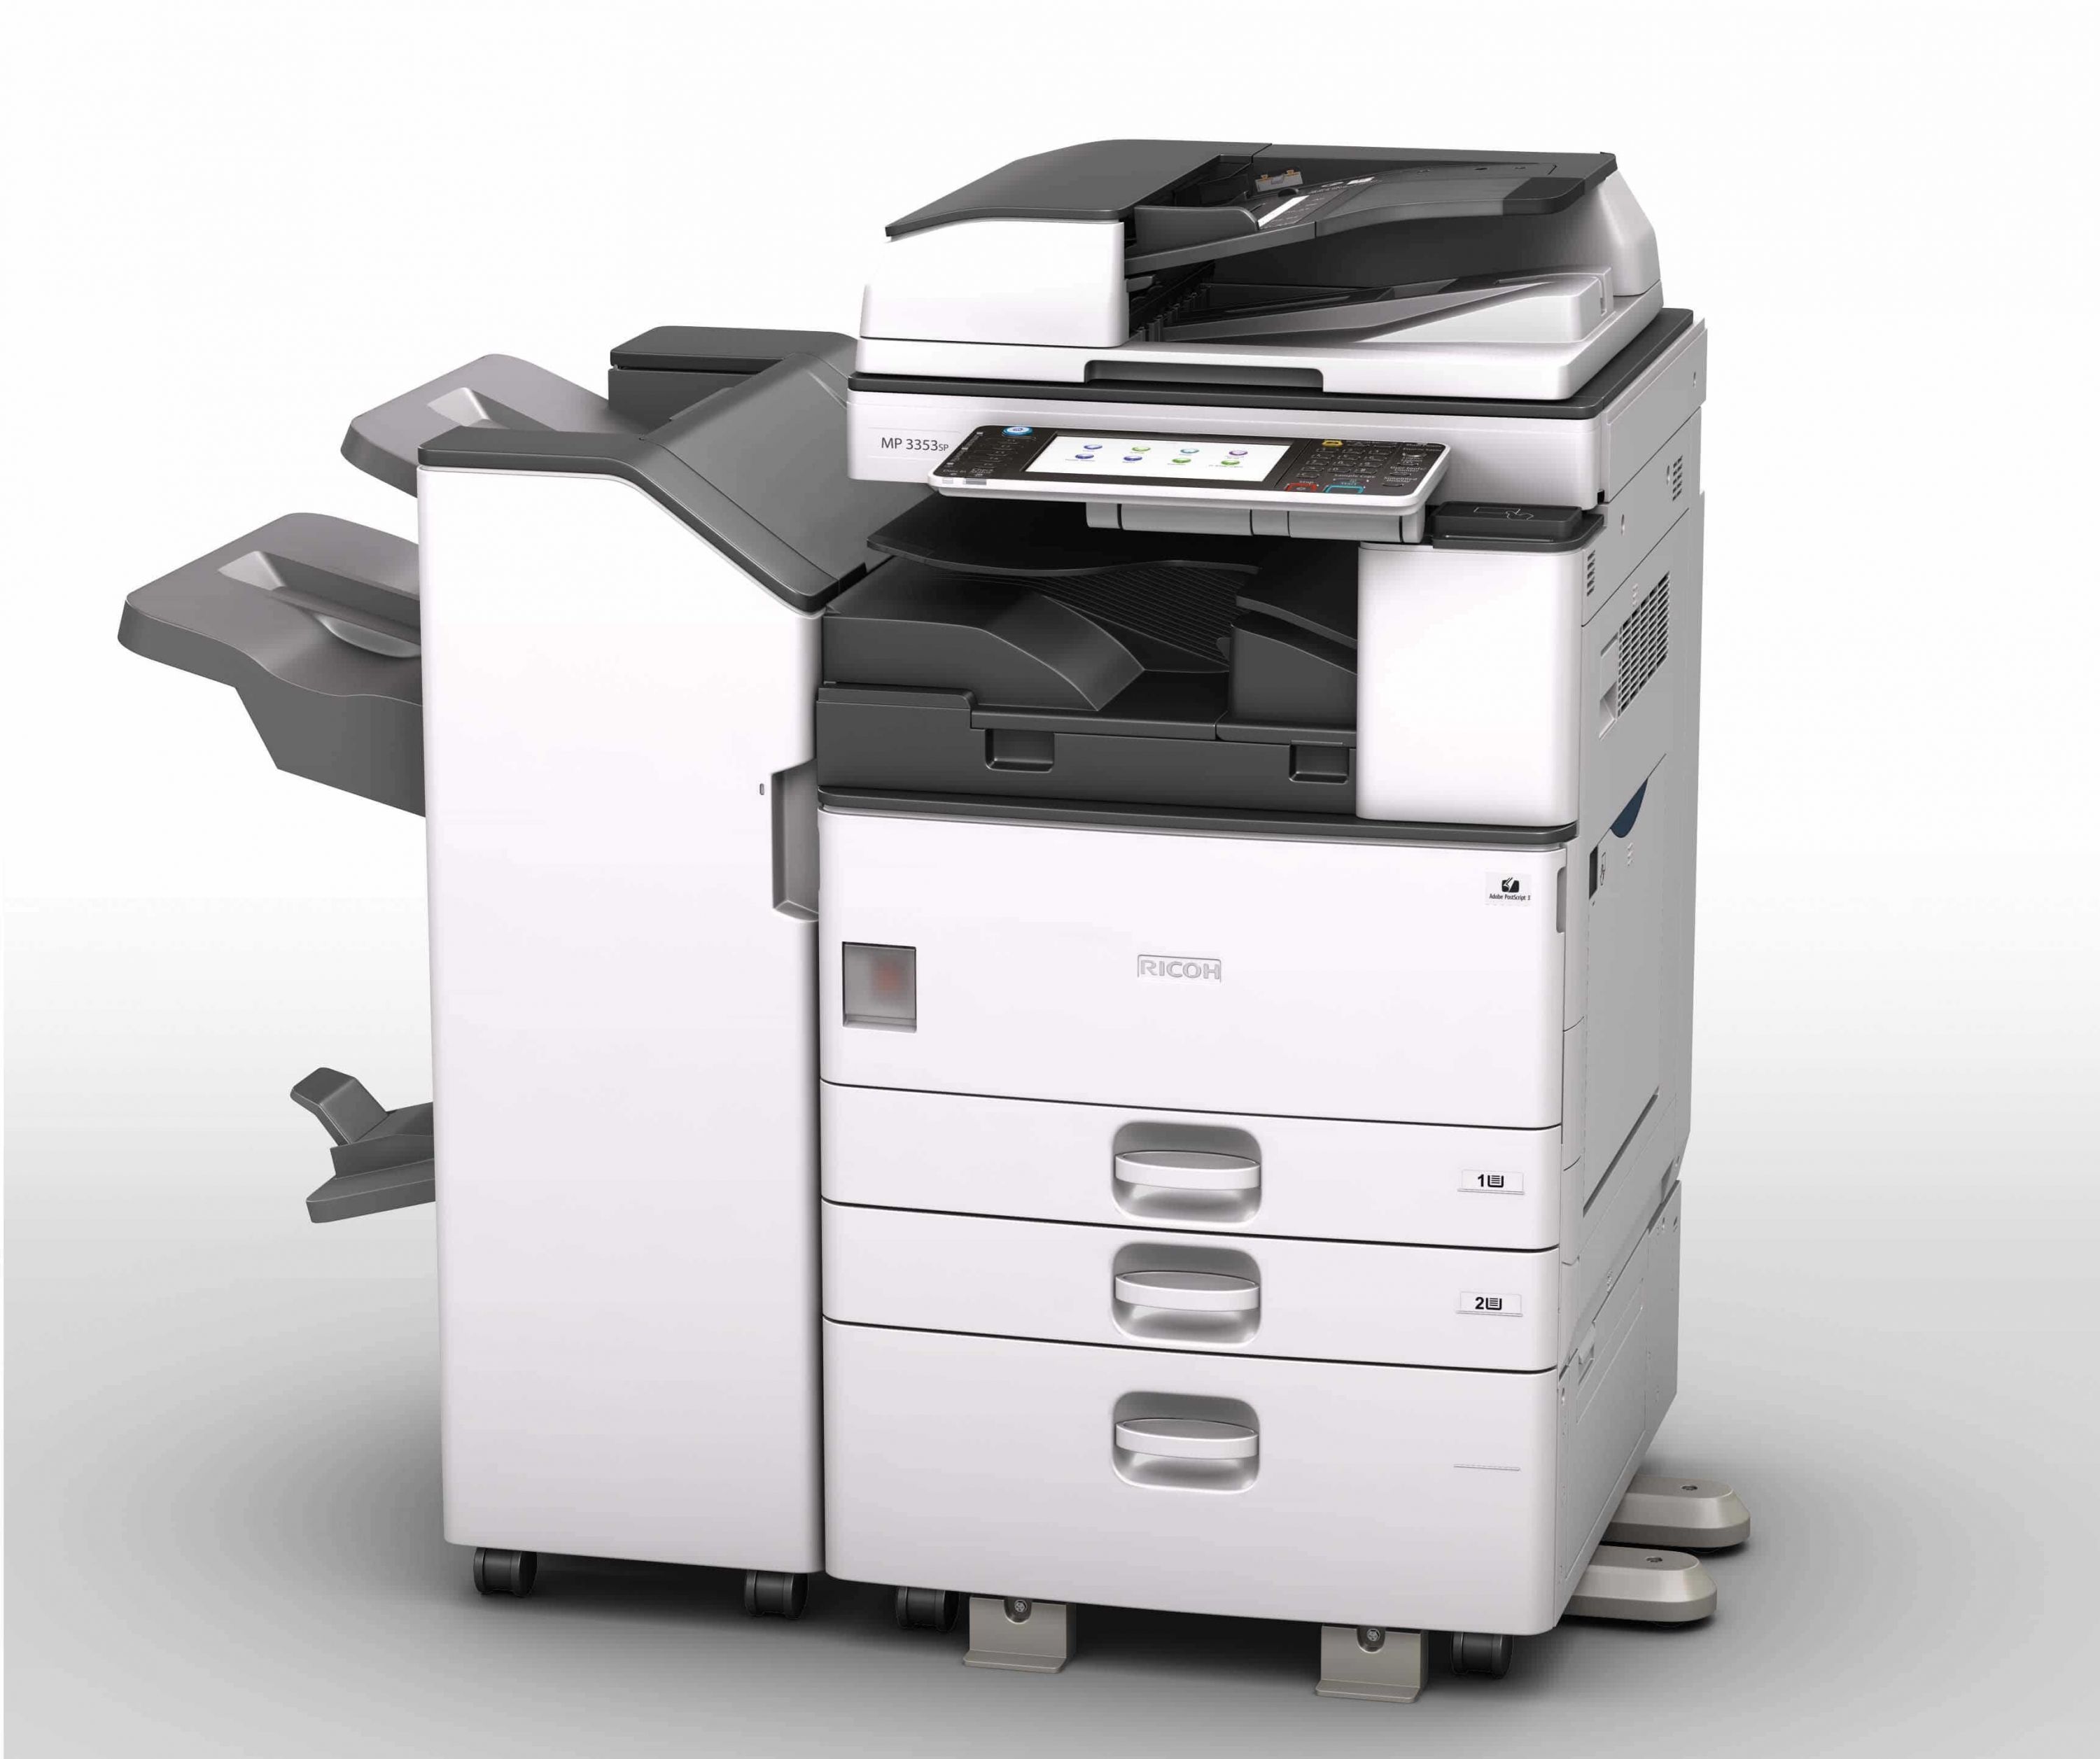 bán máy photocopy Ricoh giá rẻ tại quận 3